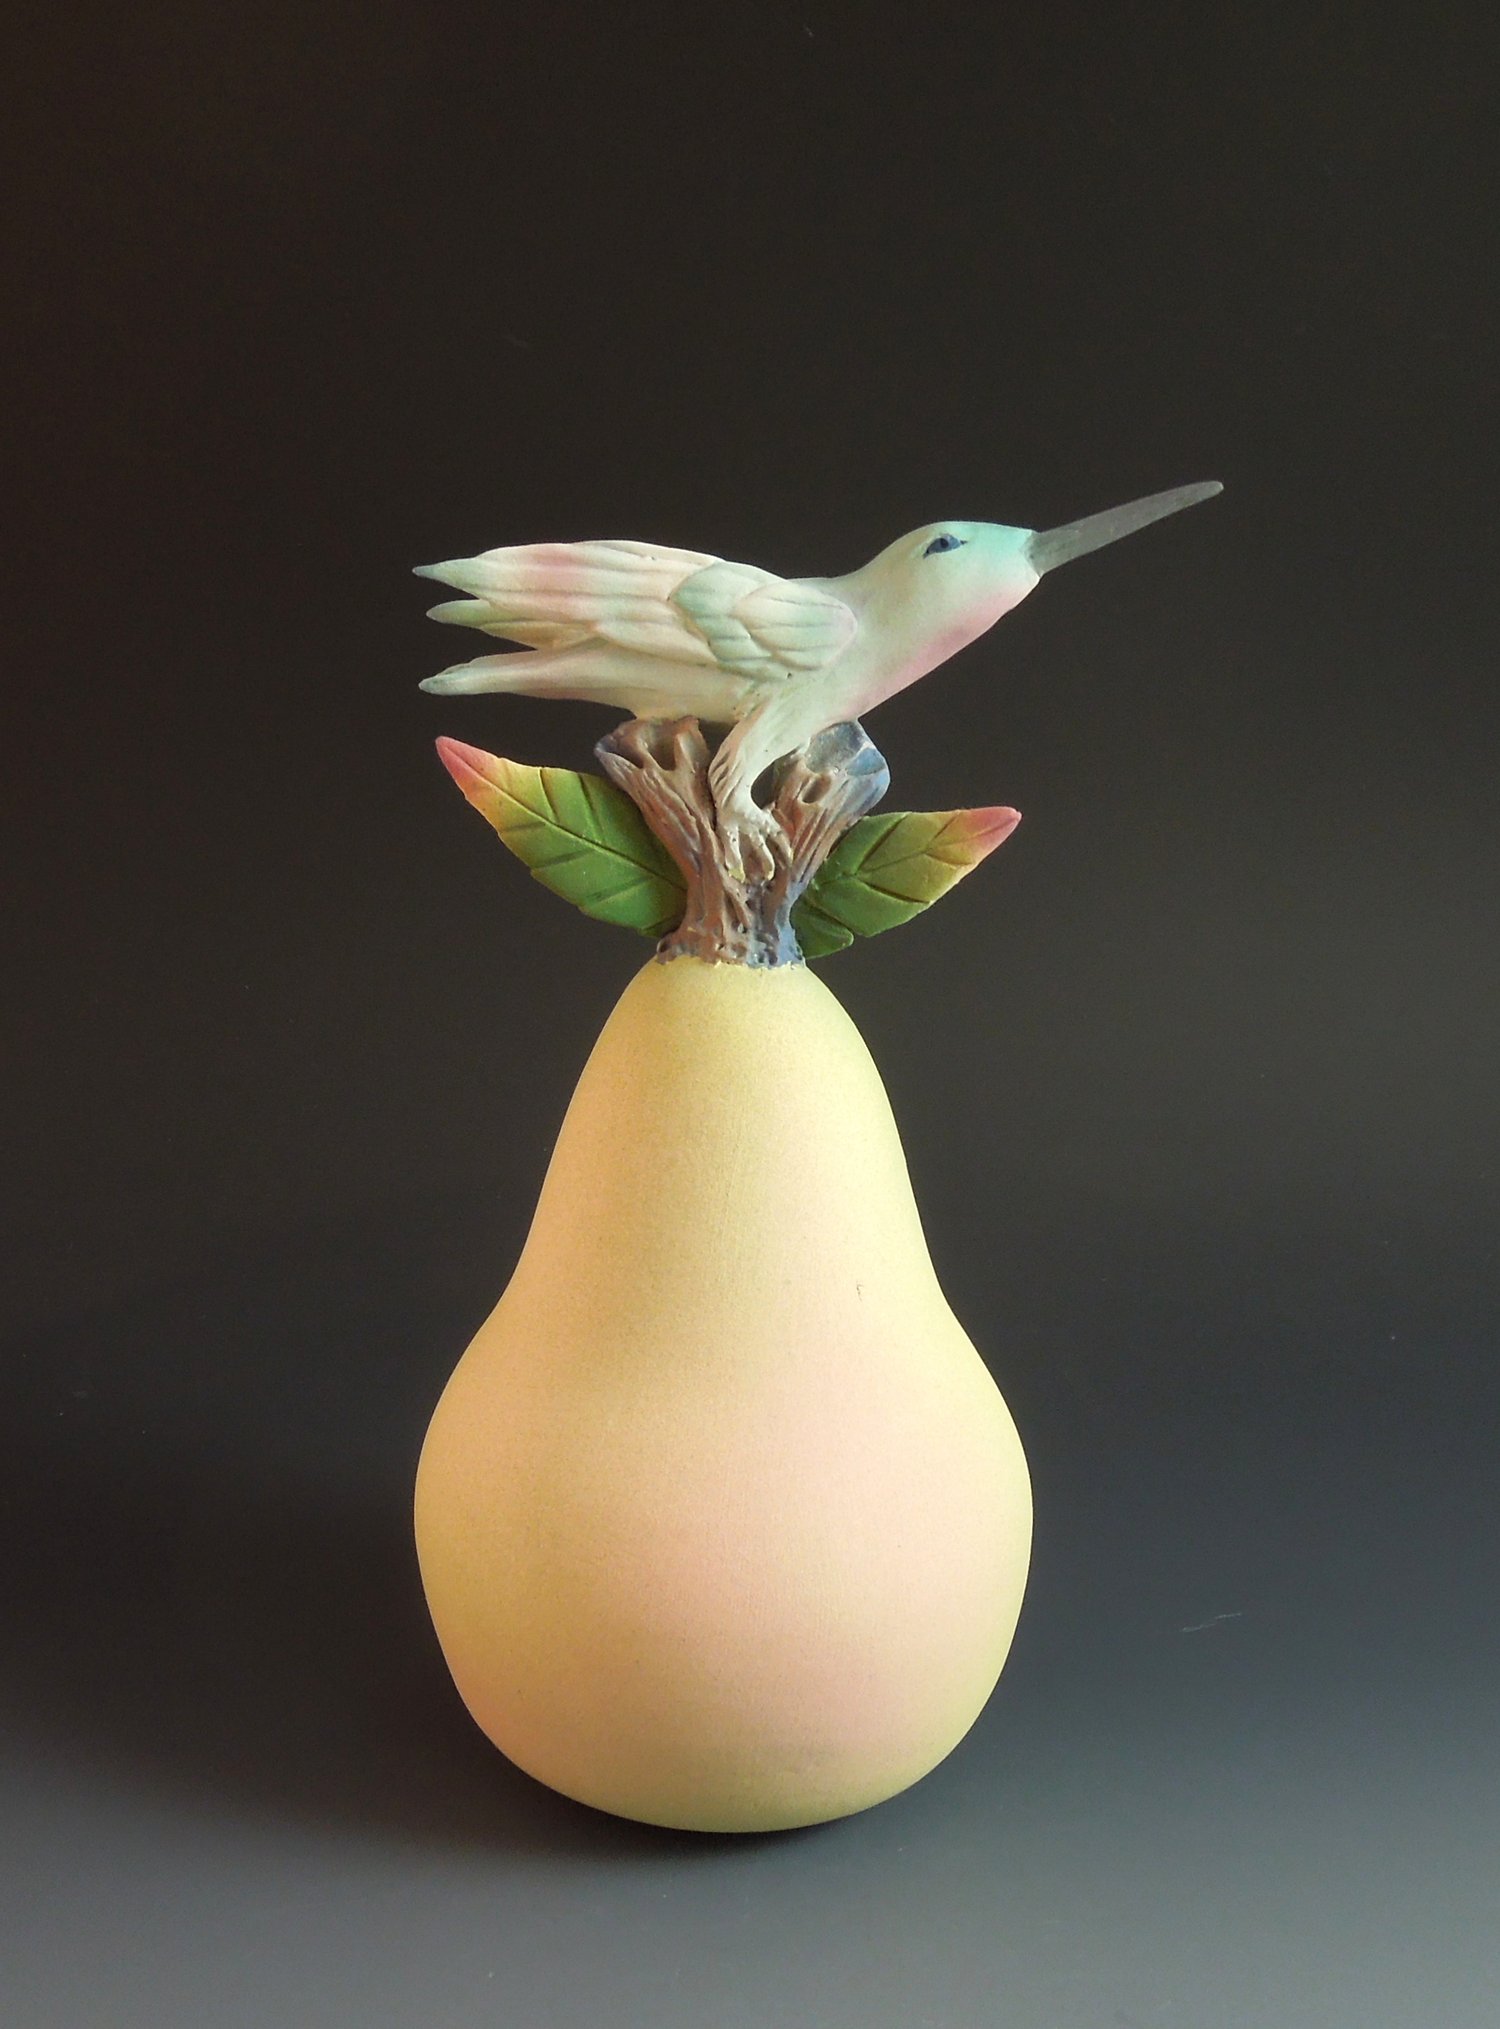 Image of Hummingbird on a Pear